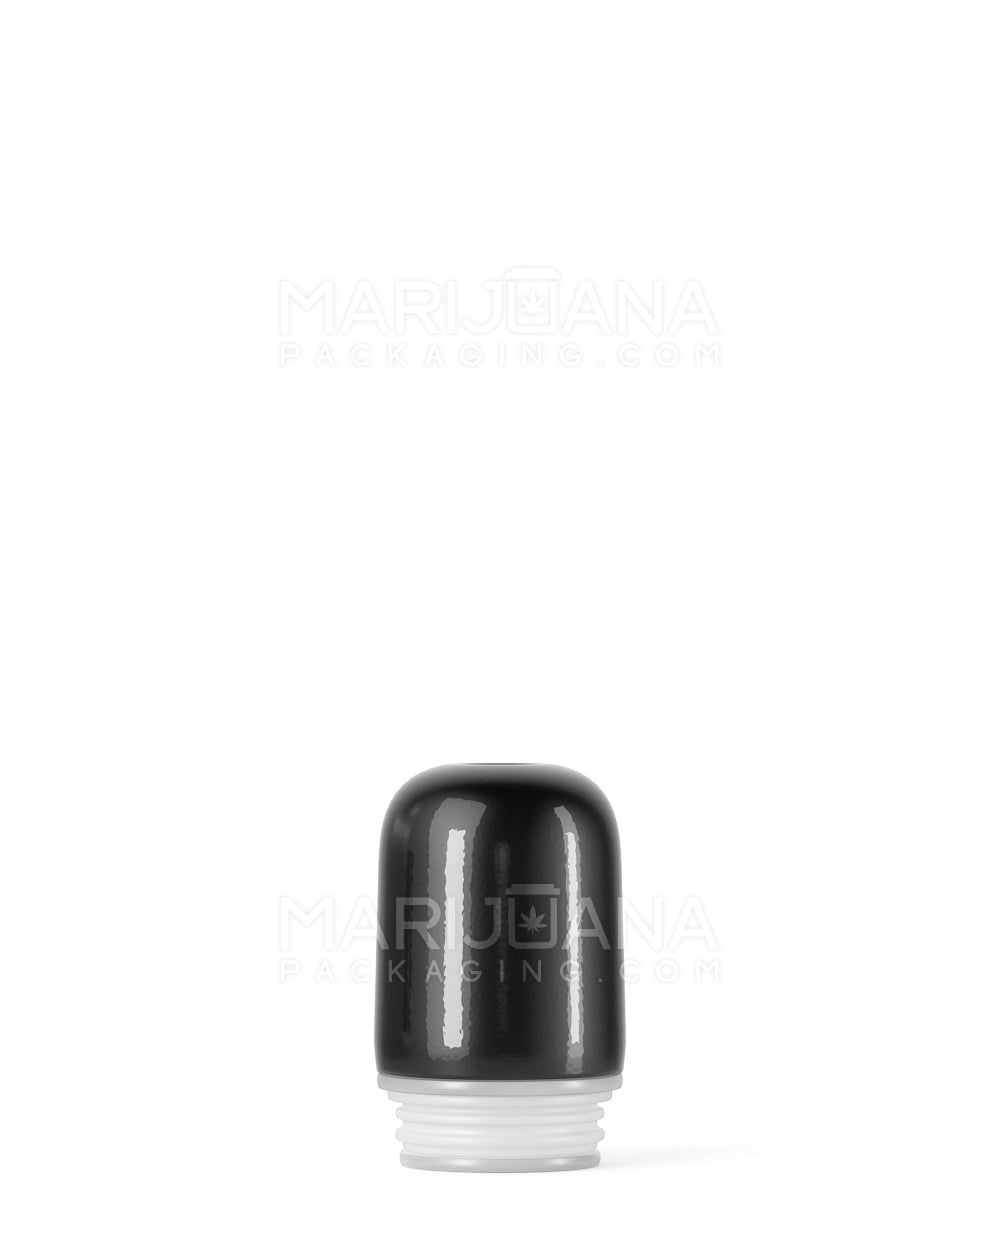 AVD | Round Vape Mouthpiece for Glass Cartridges | Black Ceramic - Eazy Press - 600 Count - 2